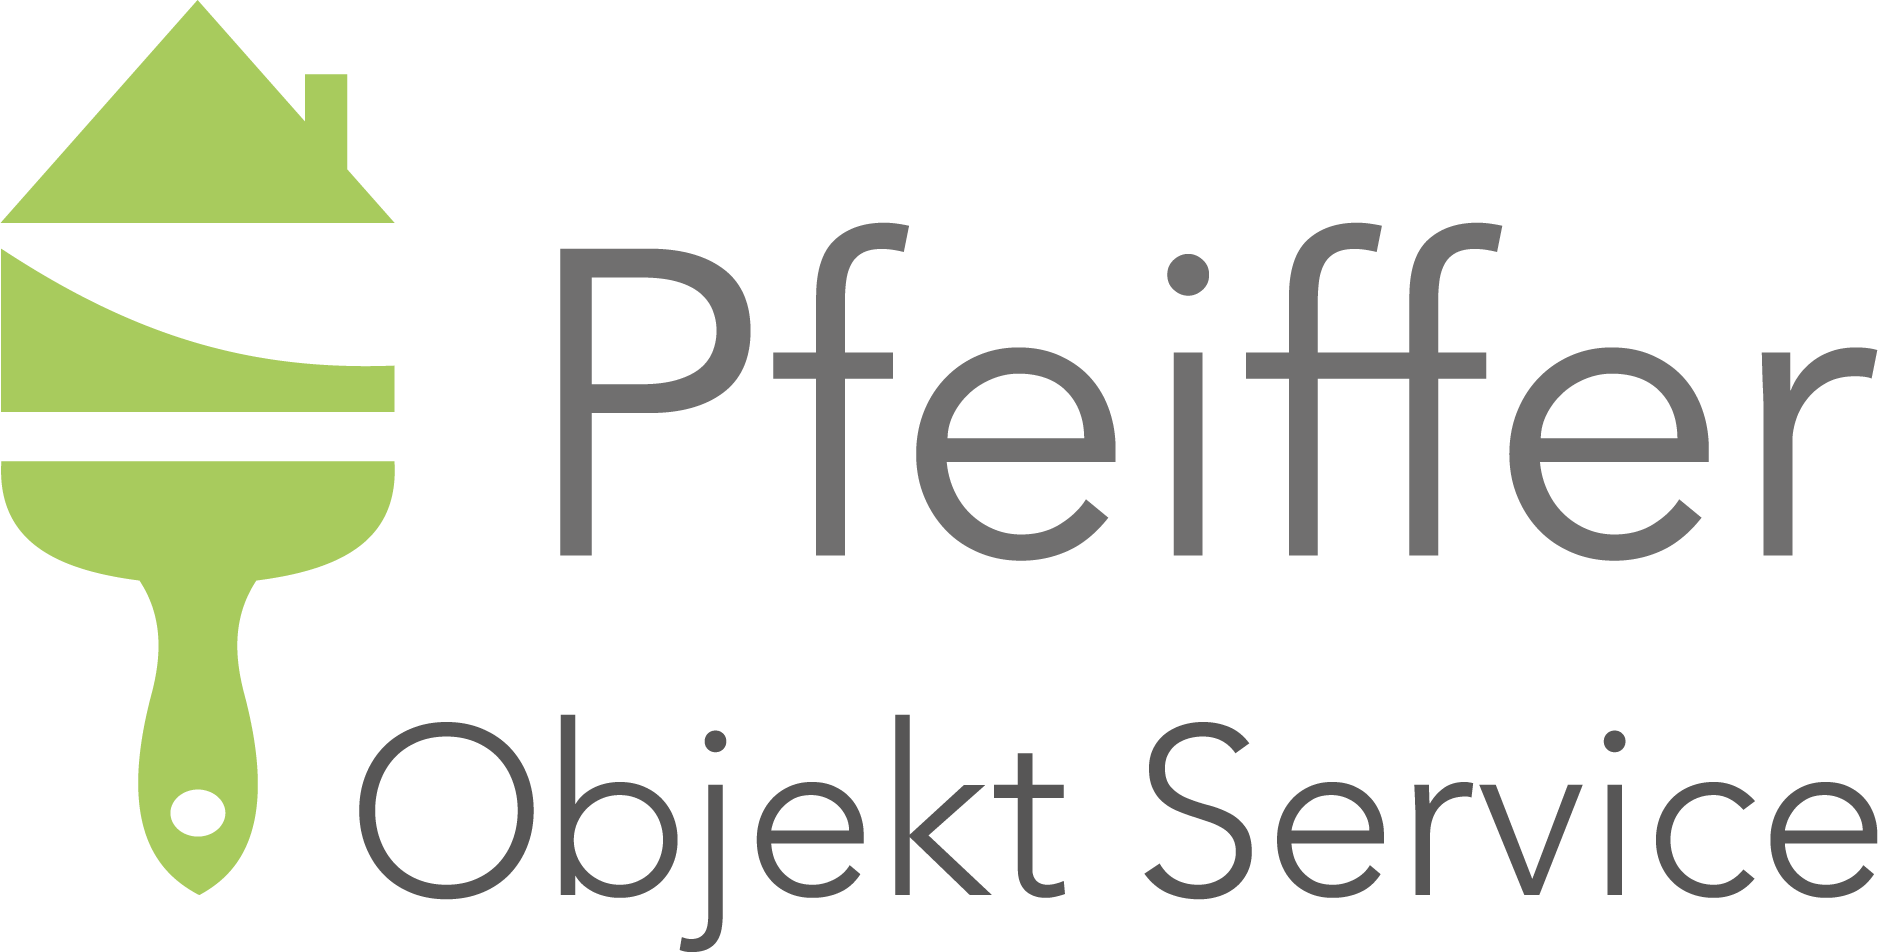 Objekt Service - Pfeiffer